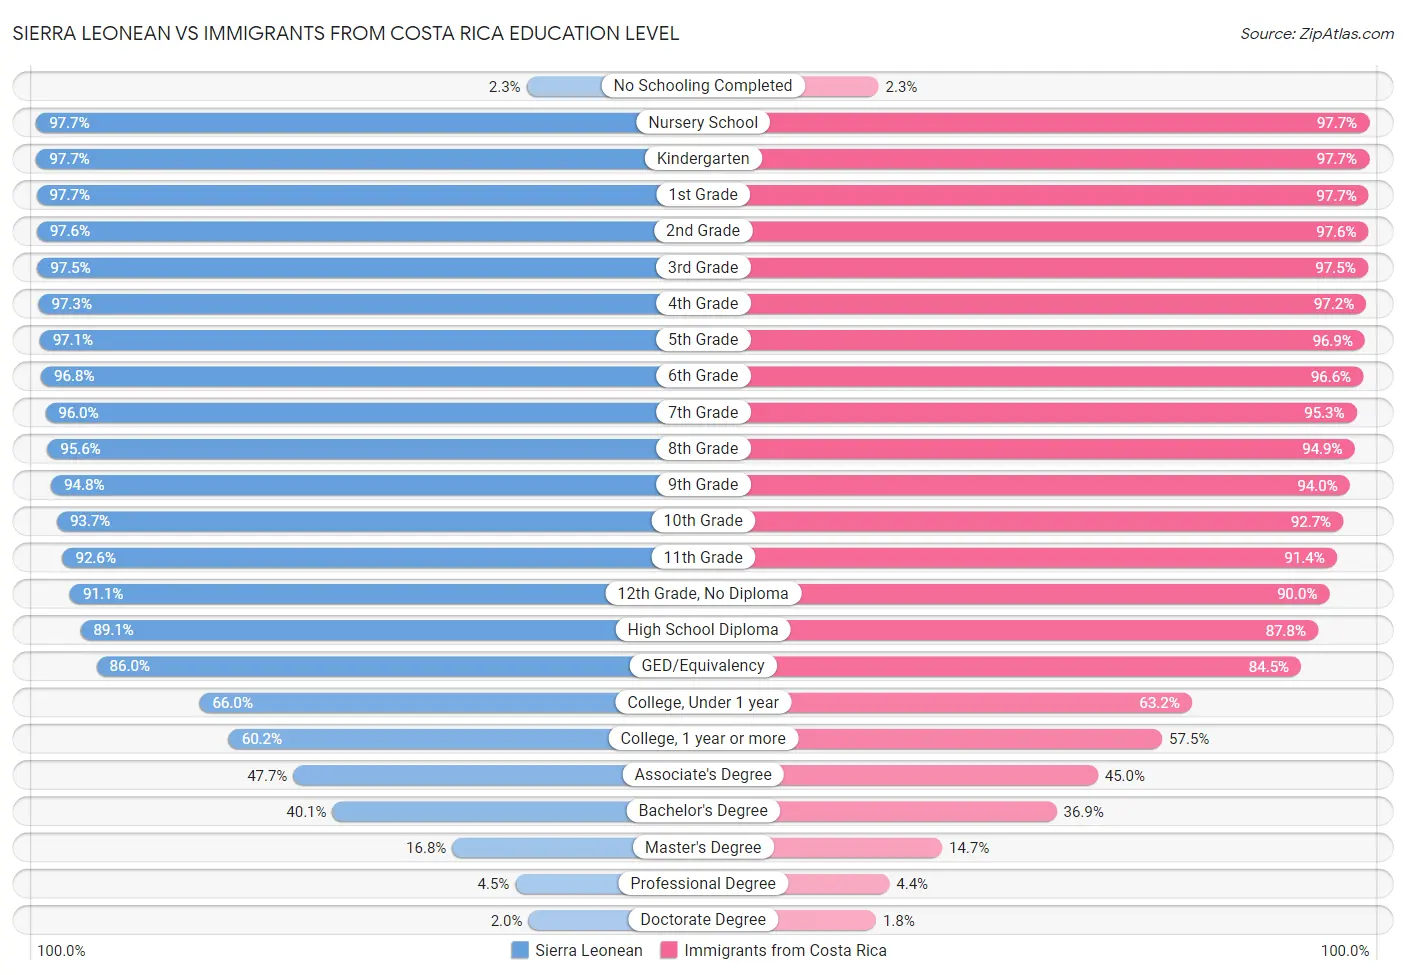 Sierra Leonean vs Immigrants from Costa Rica Education Level